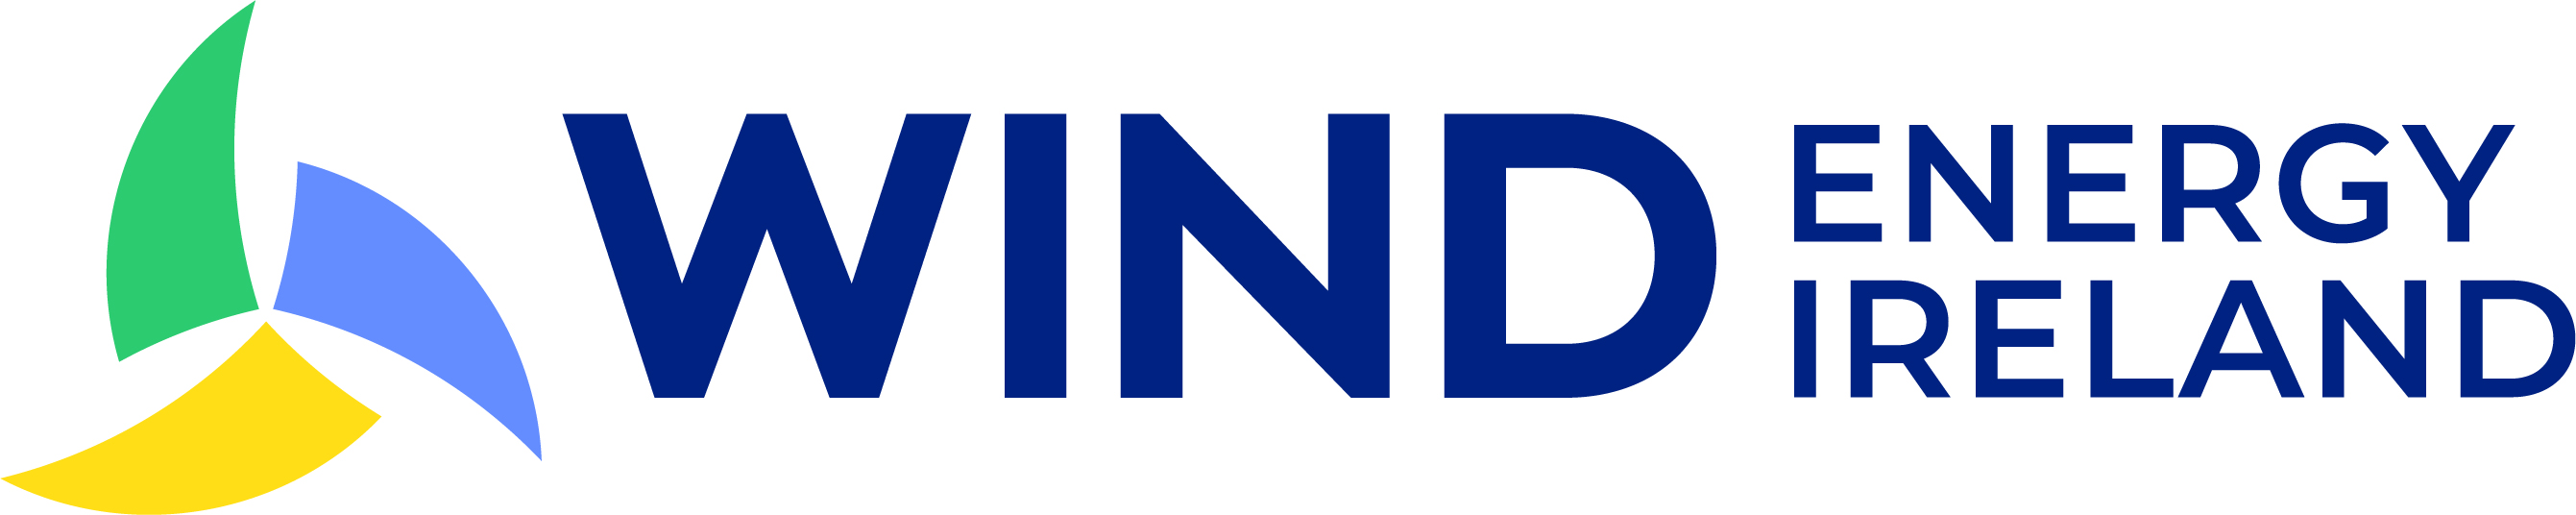 Wind Energy Ireland Logo